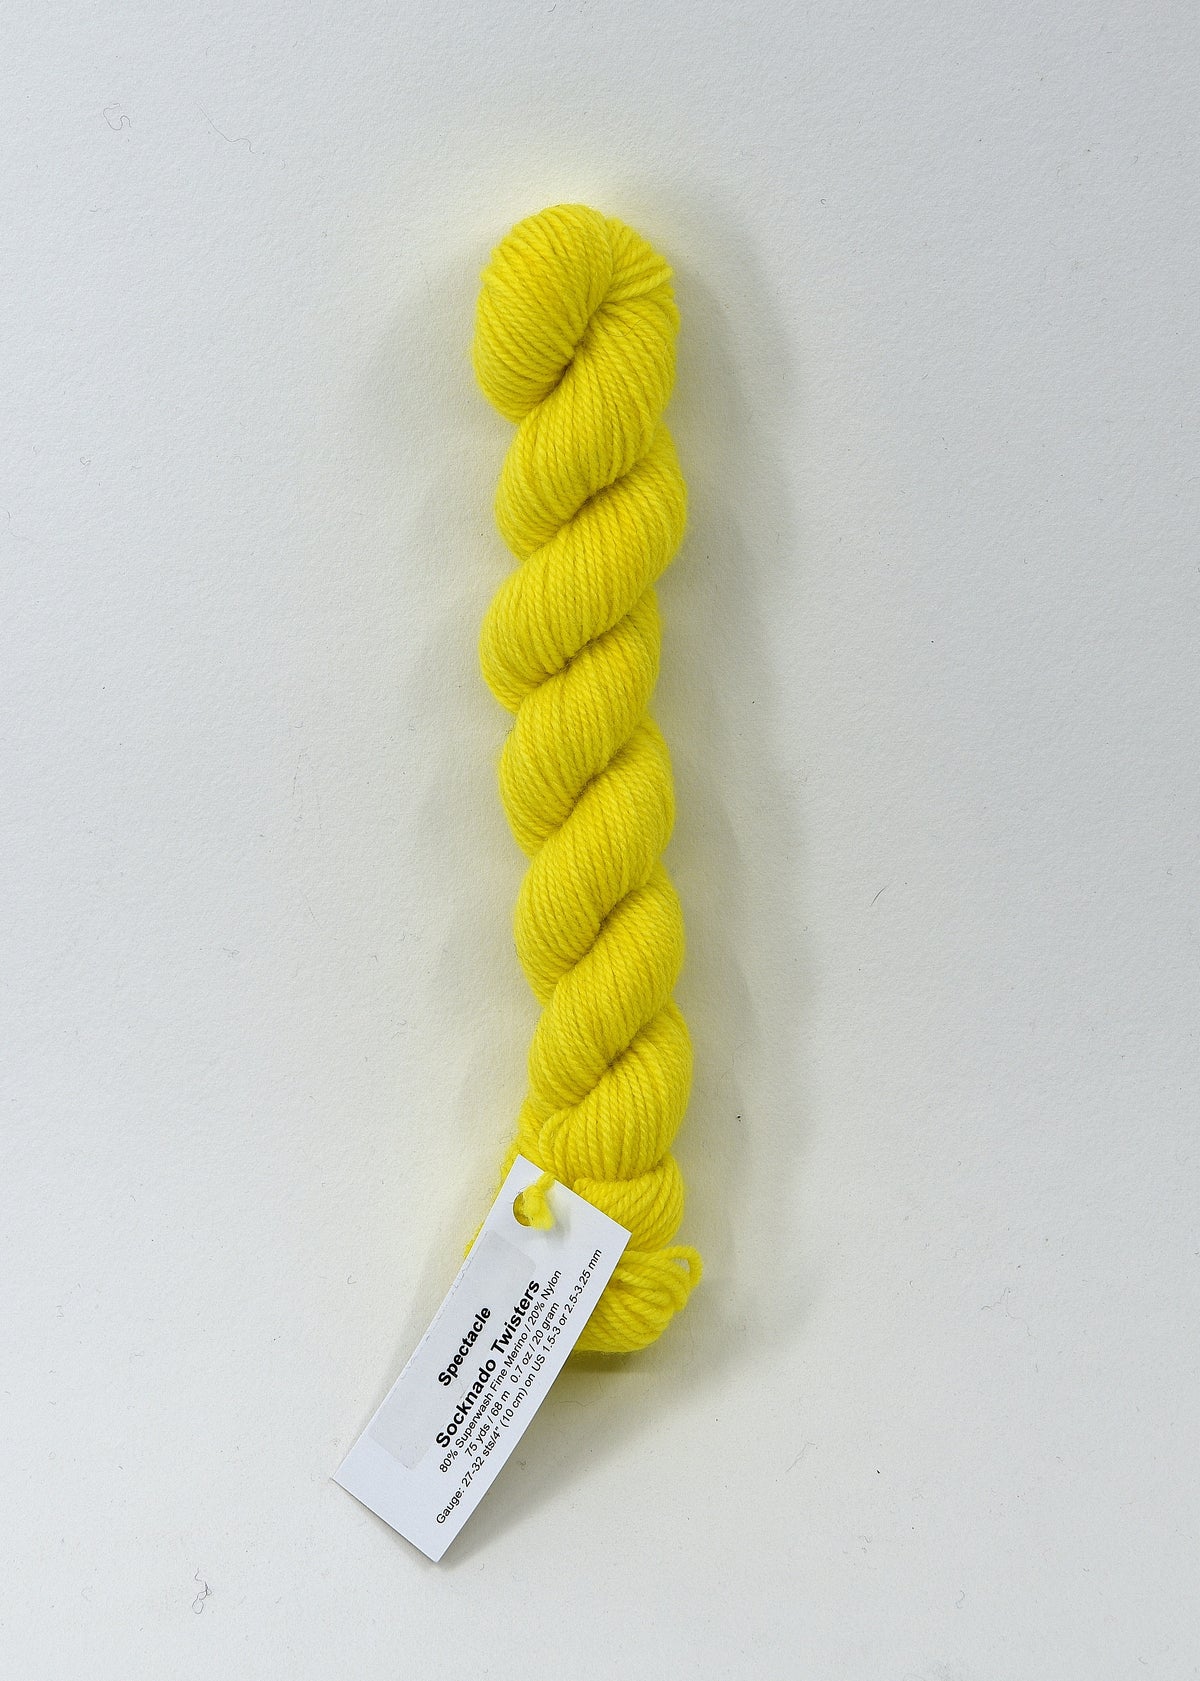 Spectacle - Socknado Mini Twister 20 Gram - Dyed Stock